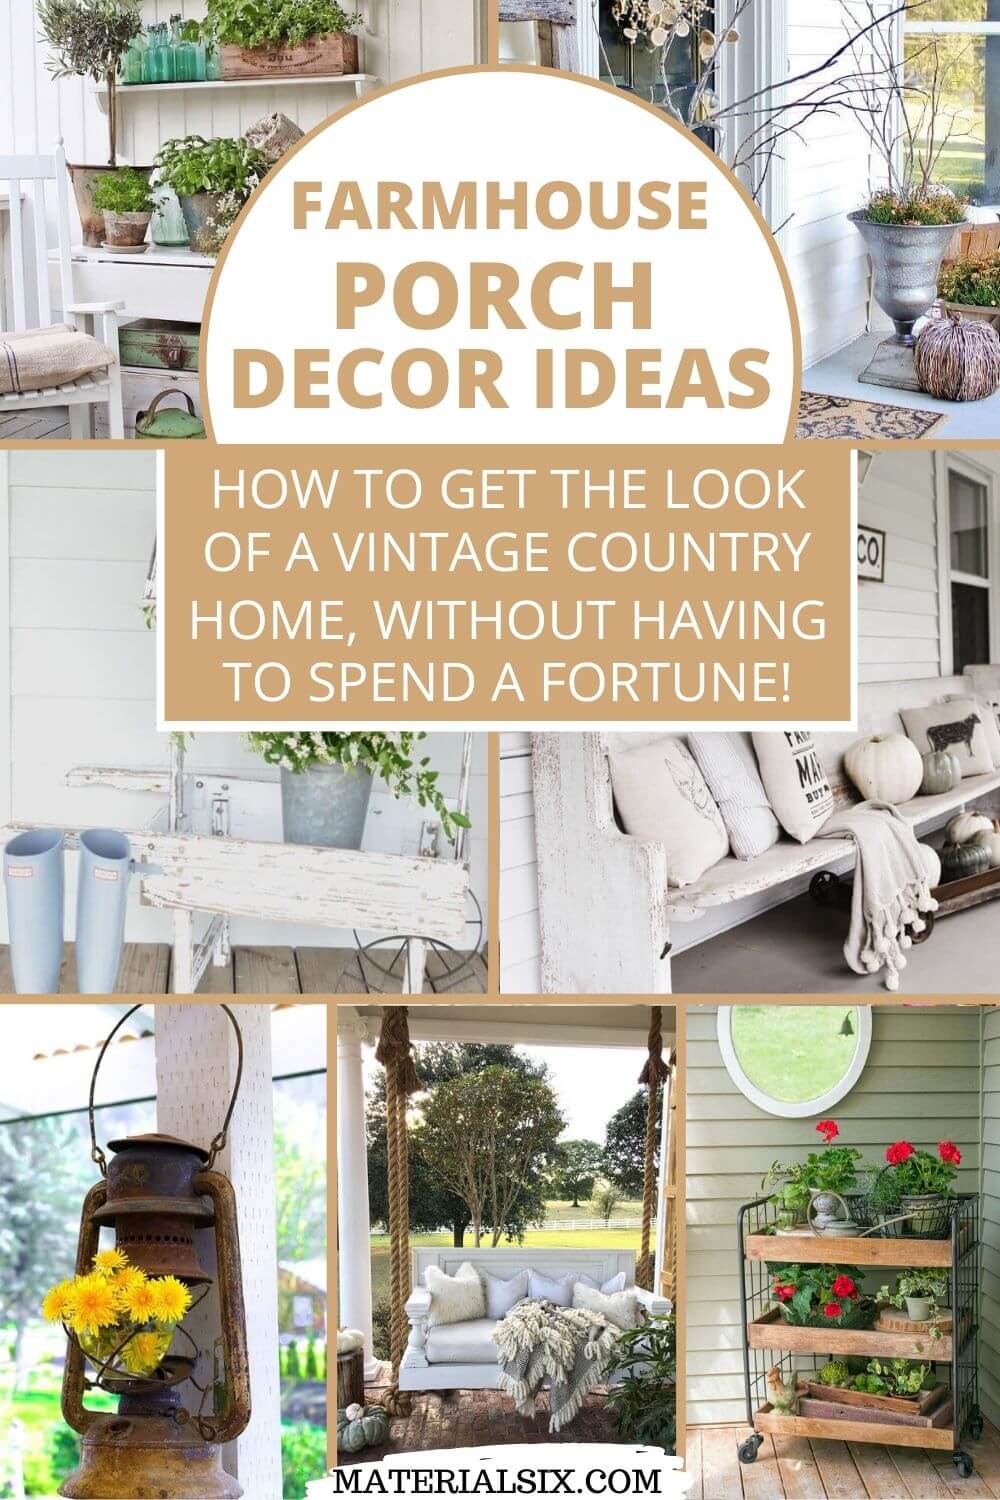 40+ Stunning Rustic Farmhouse Porch Decor Ideas